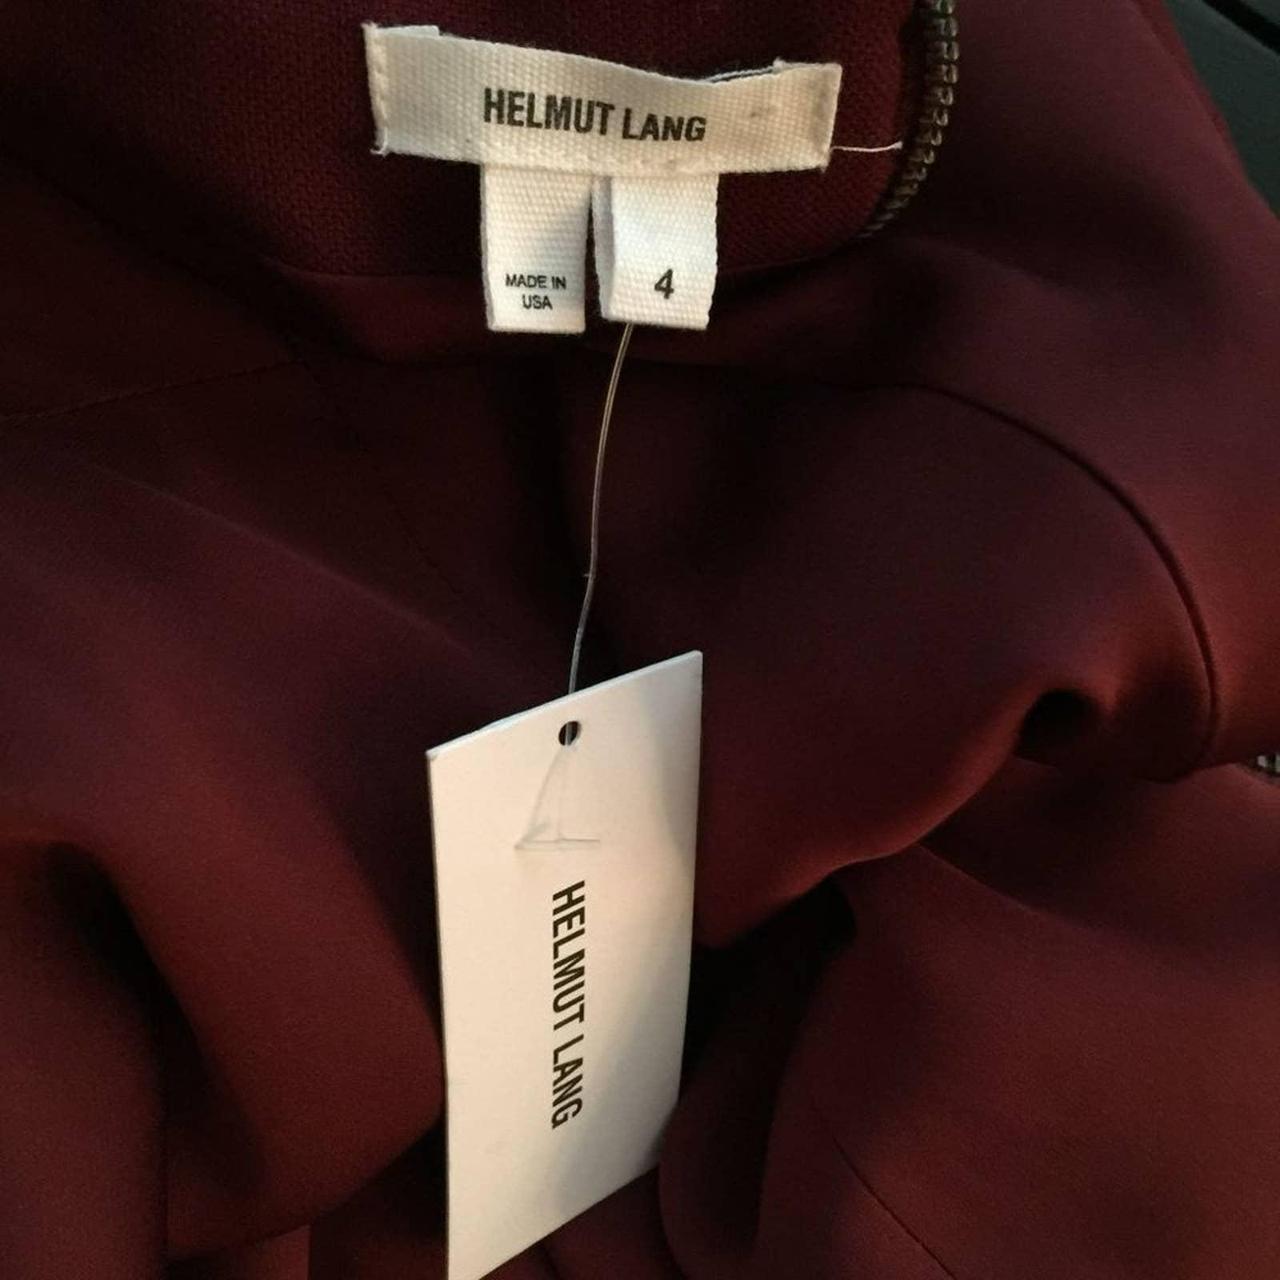 Product Image 4 - HELMUT LANG pxl dress burgundy